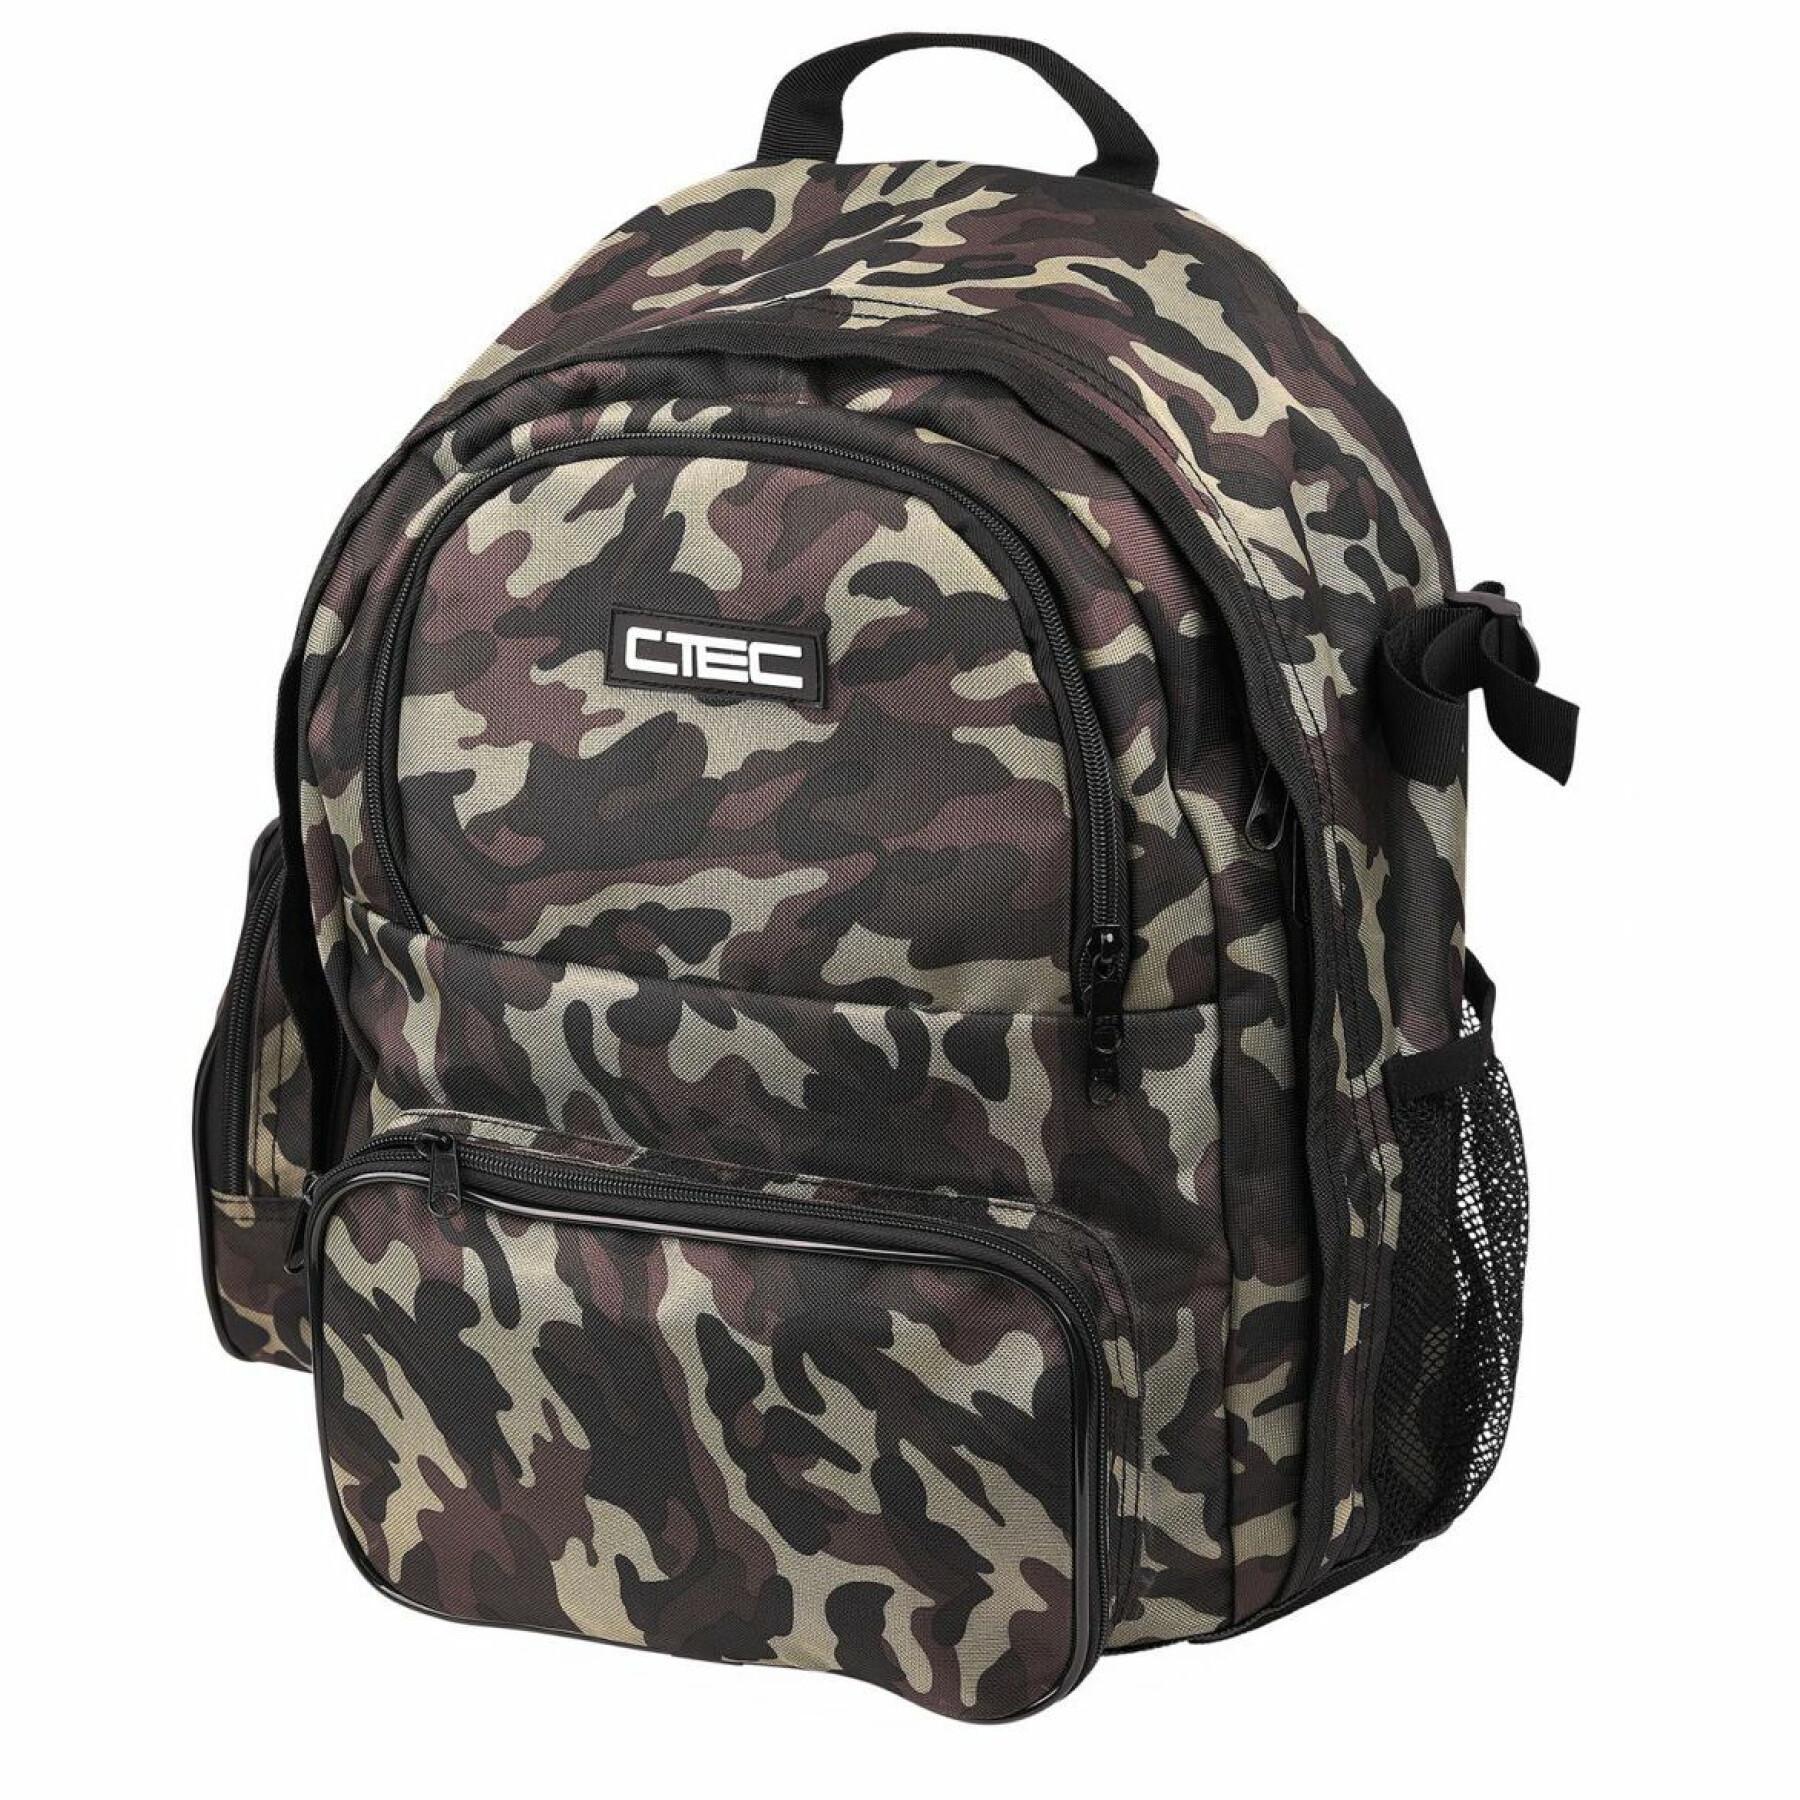 Backpack C-Tec camou